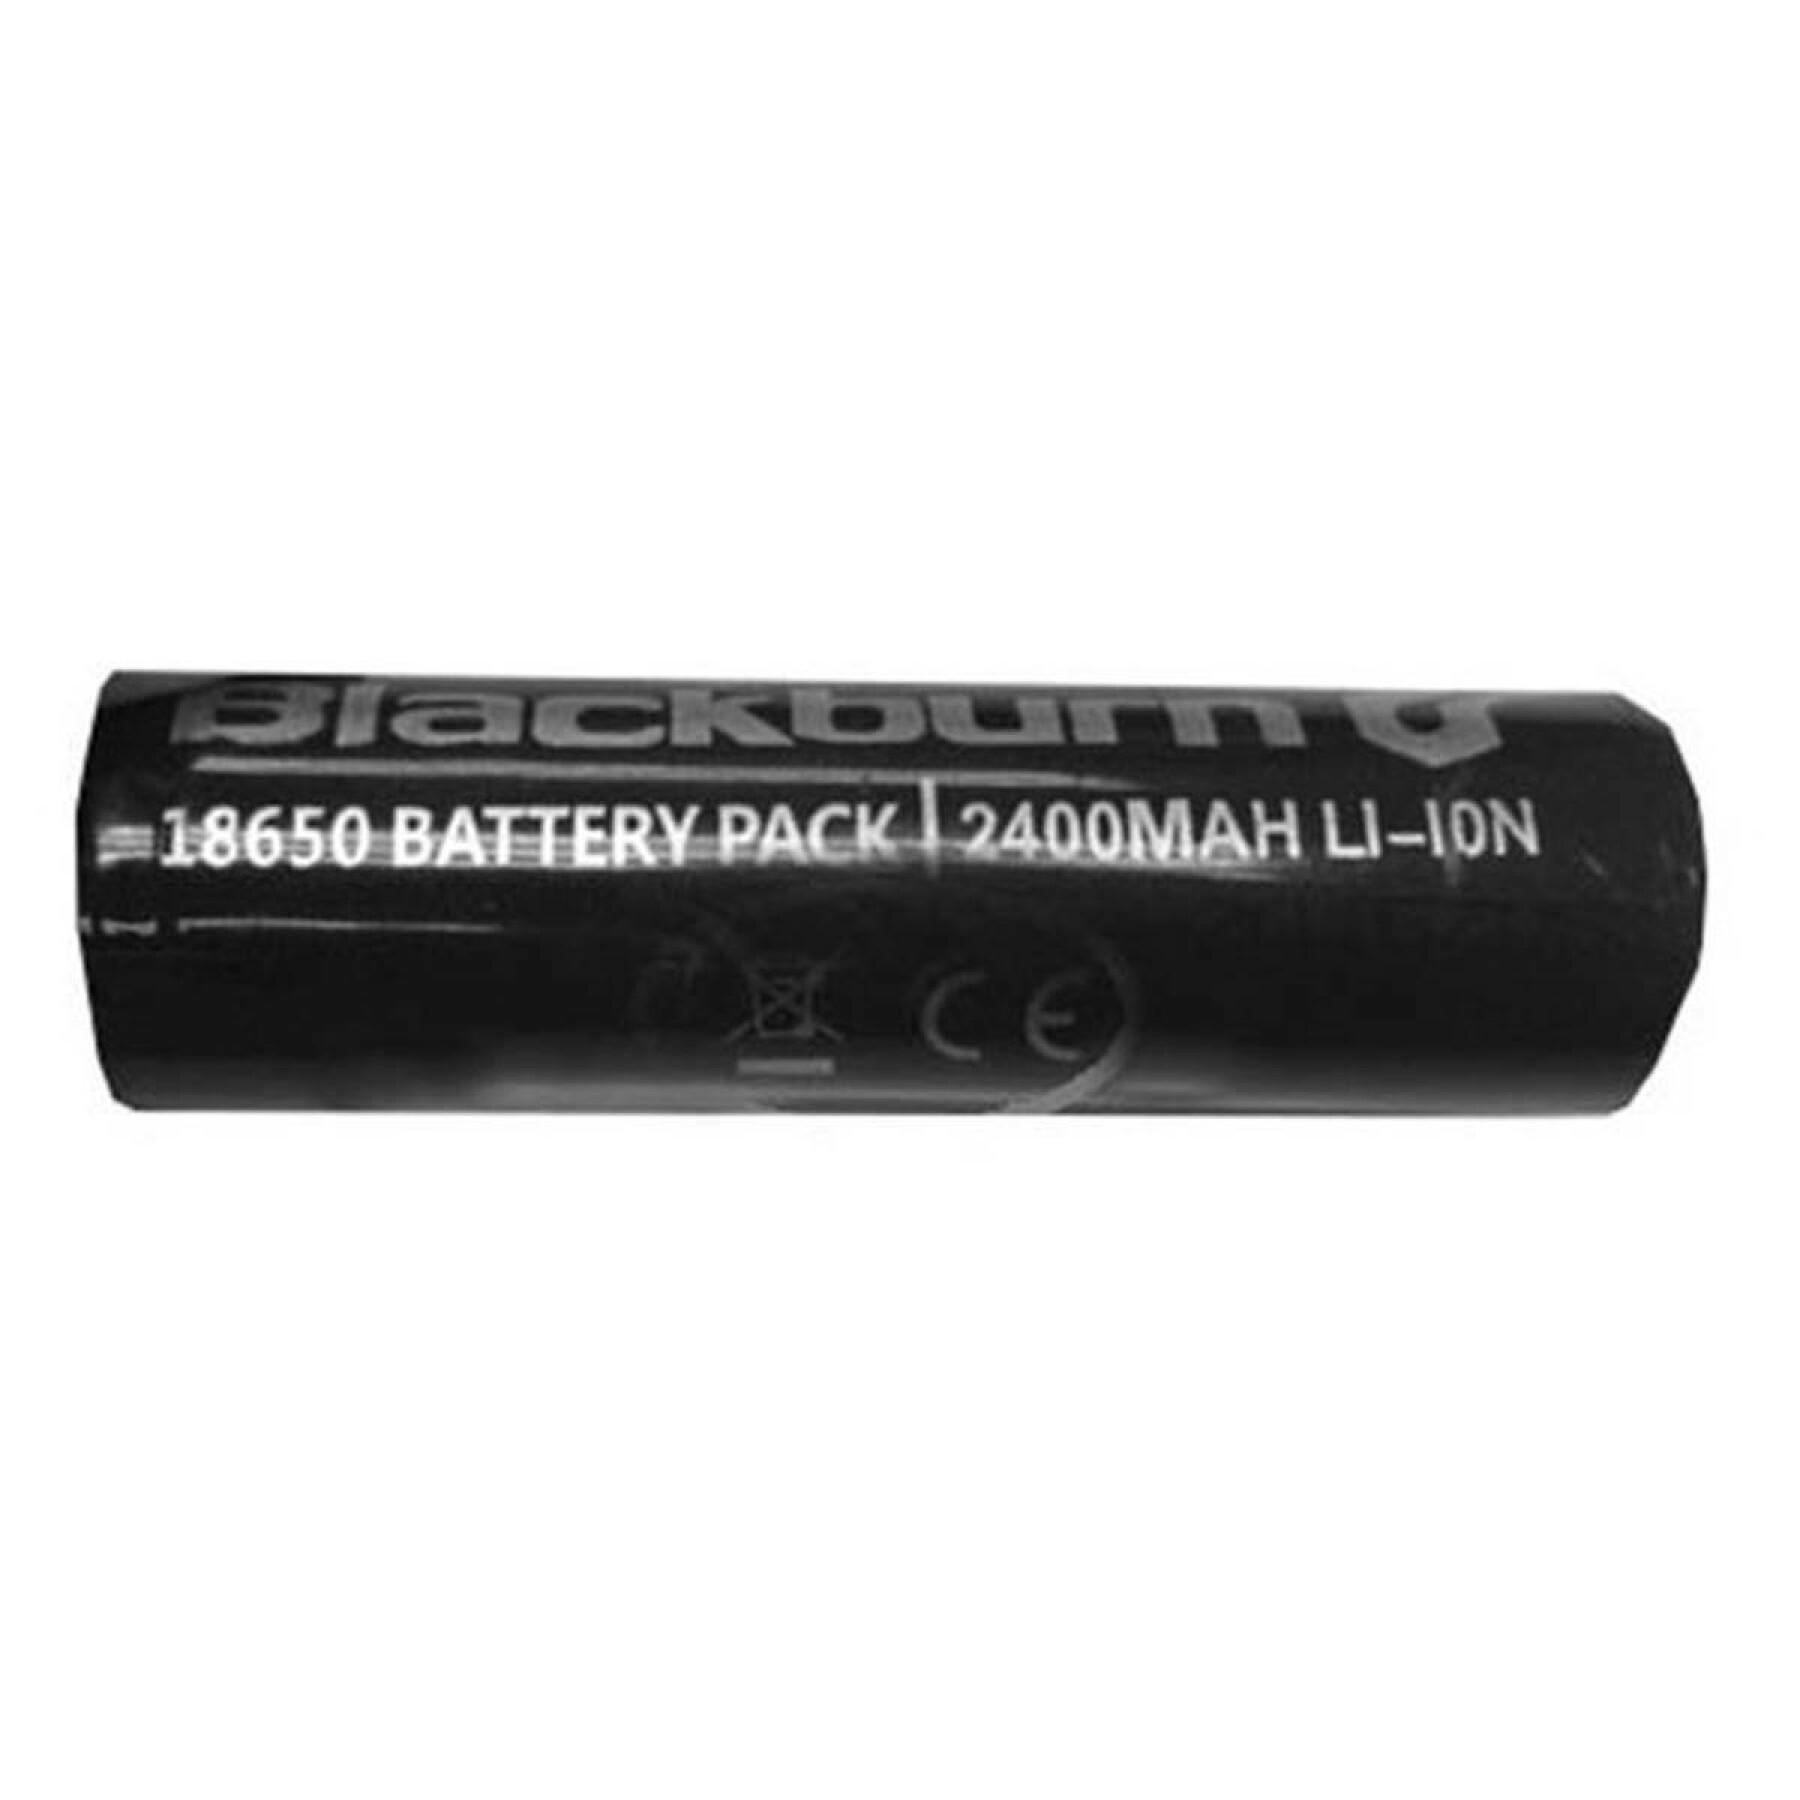 Batterie Beleuchtung Blackburn Central 300/700